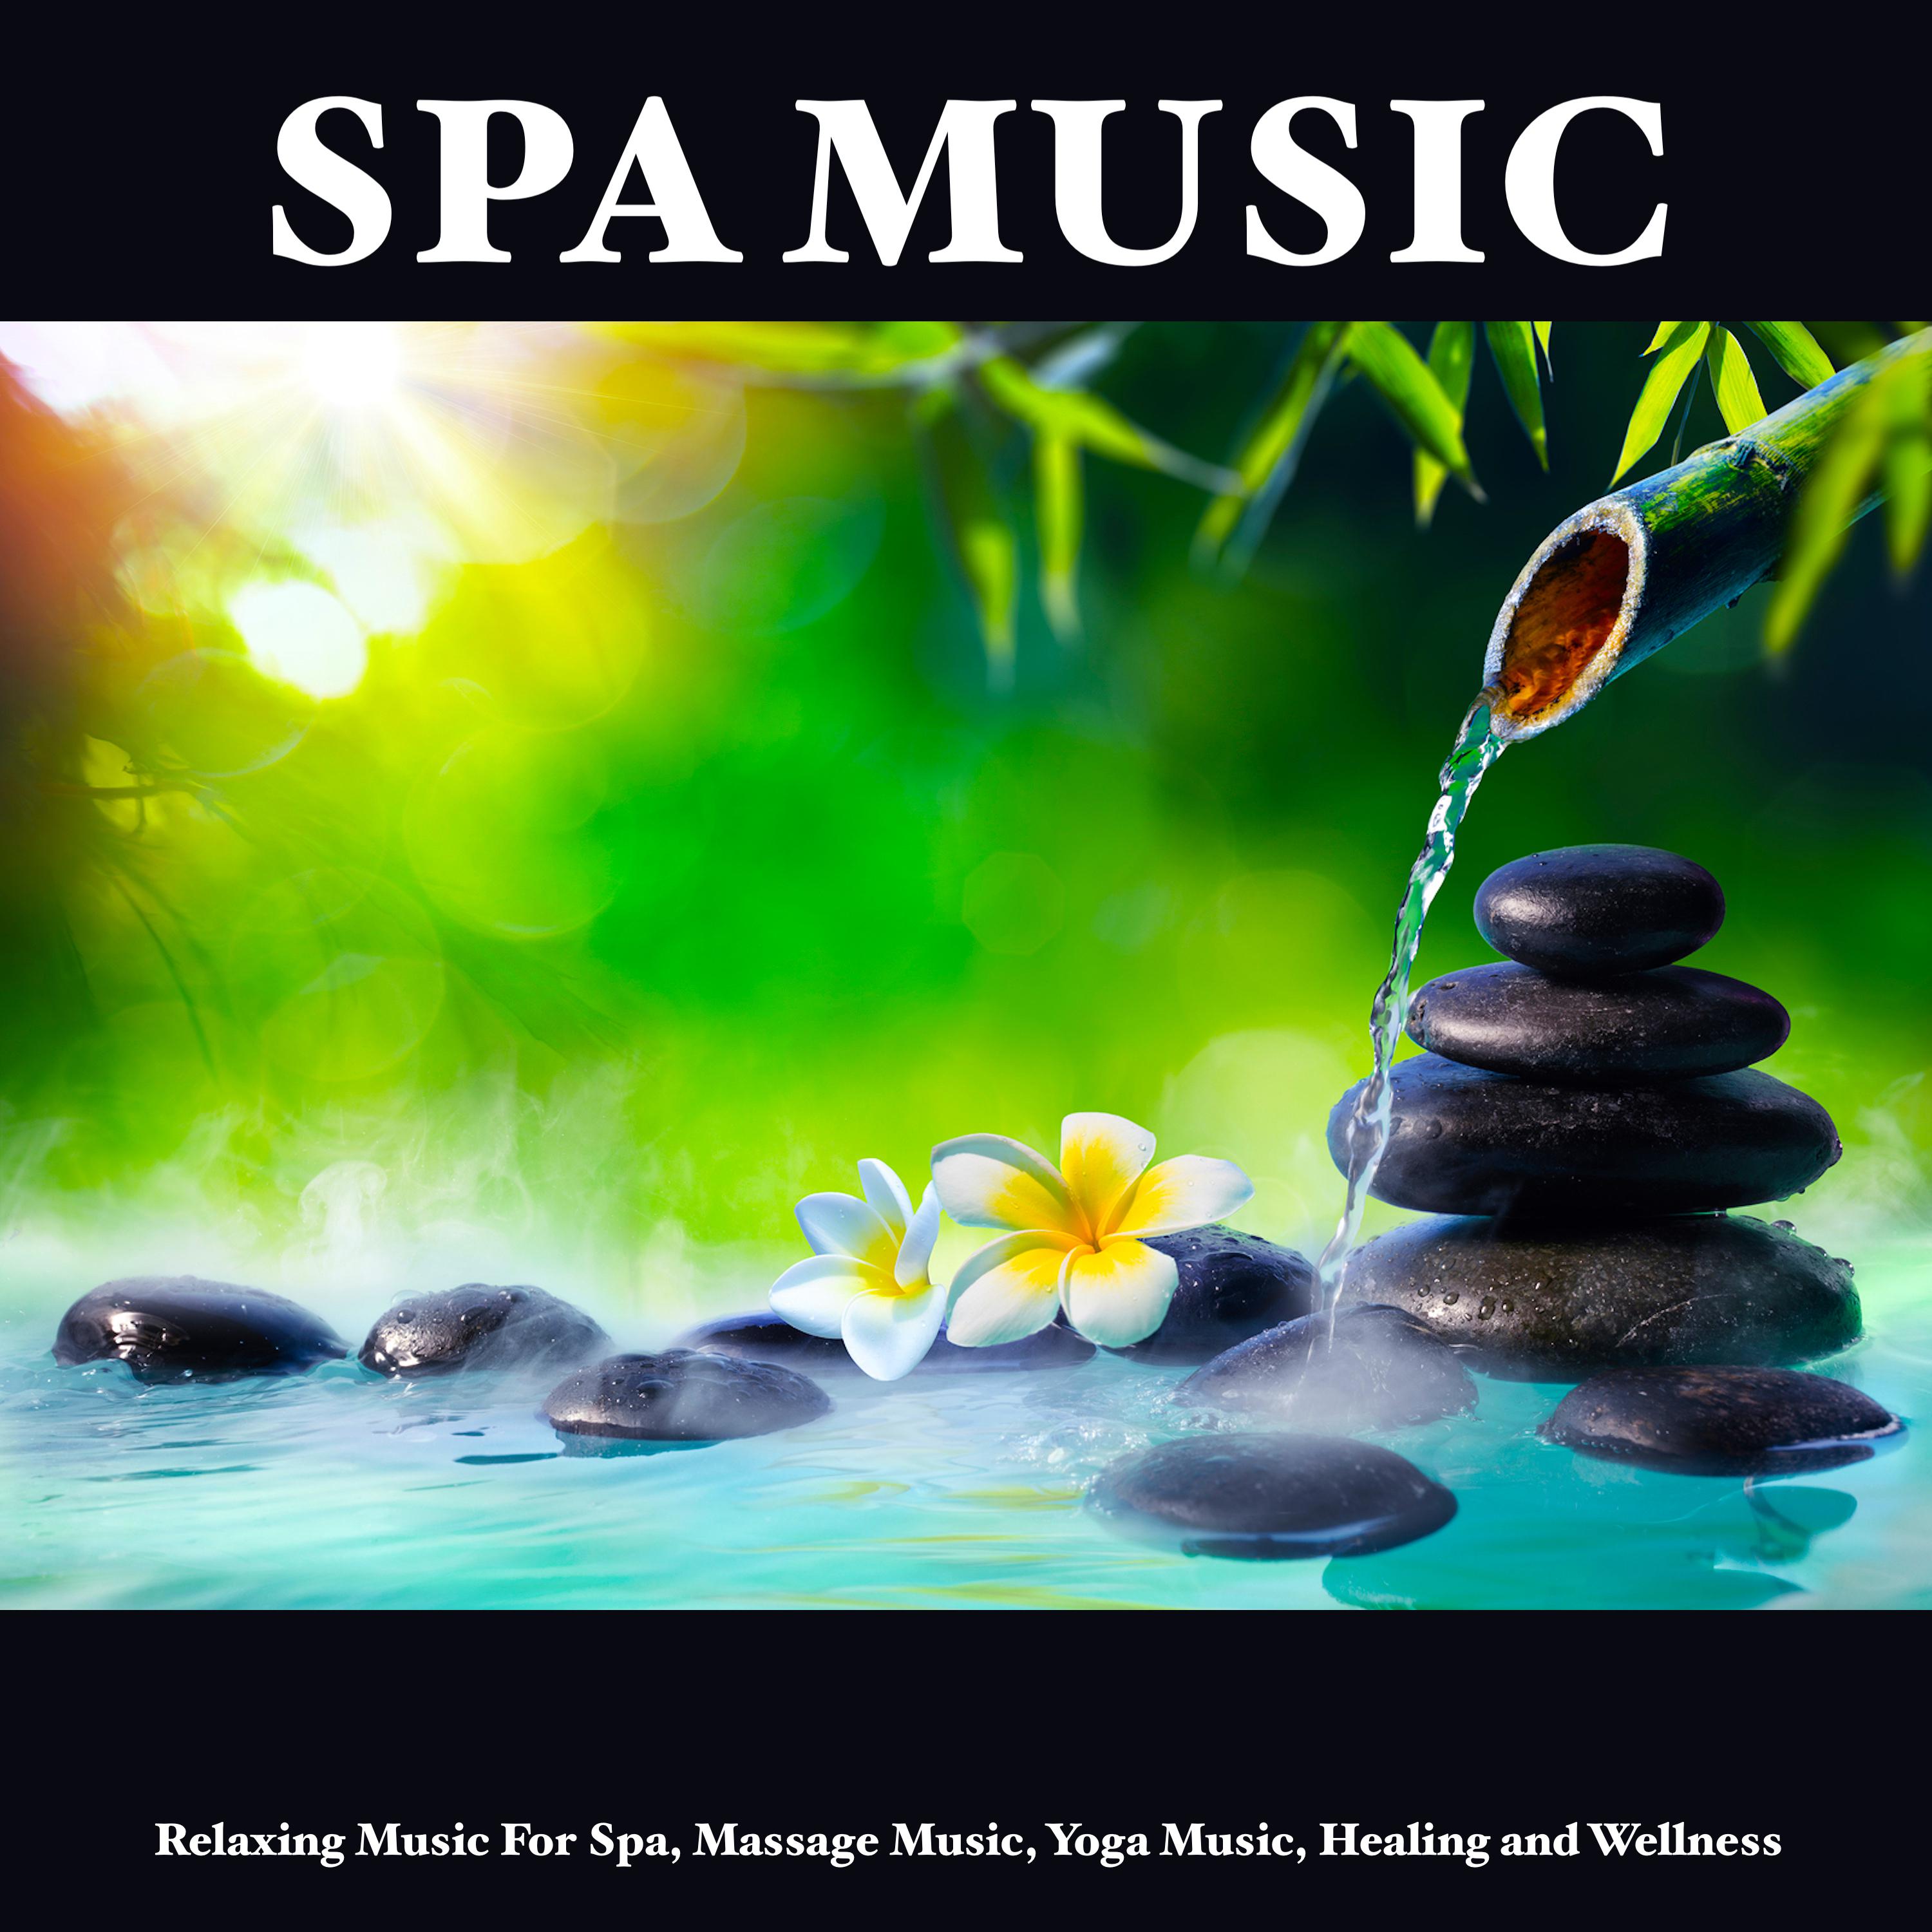 Calming Spa Music